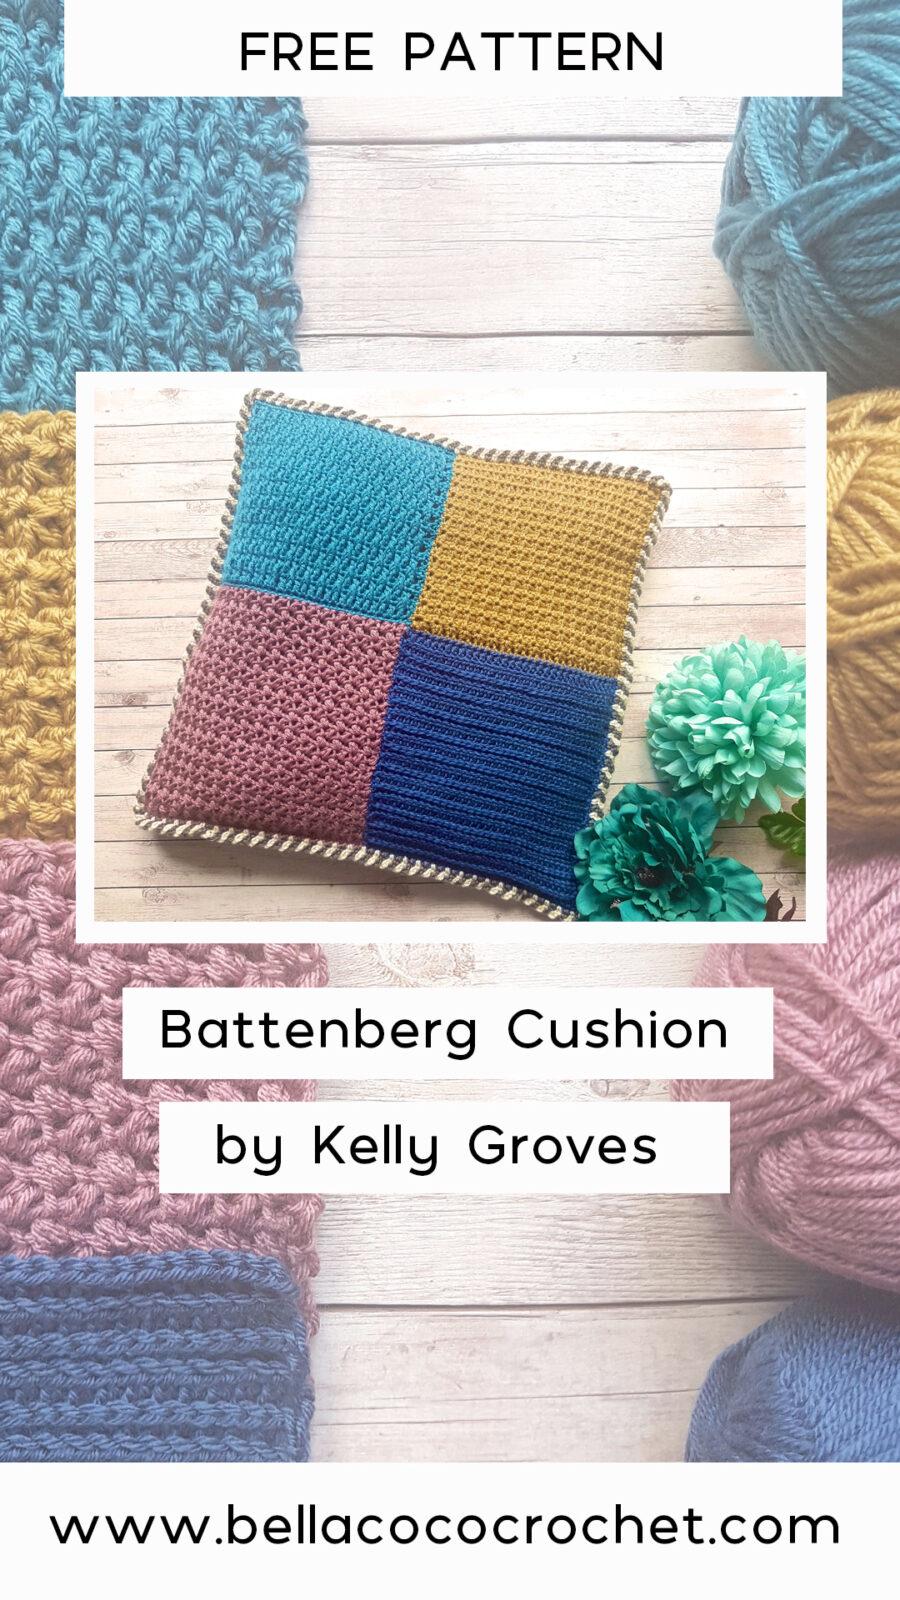 Battenberg Cushion by Kelly Groves